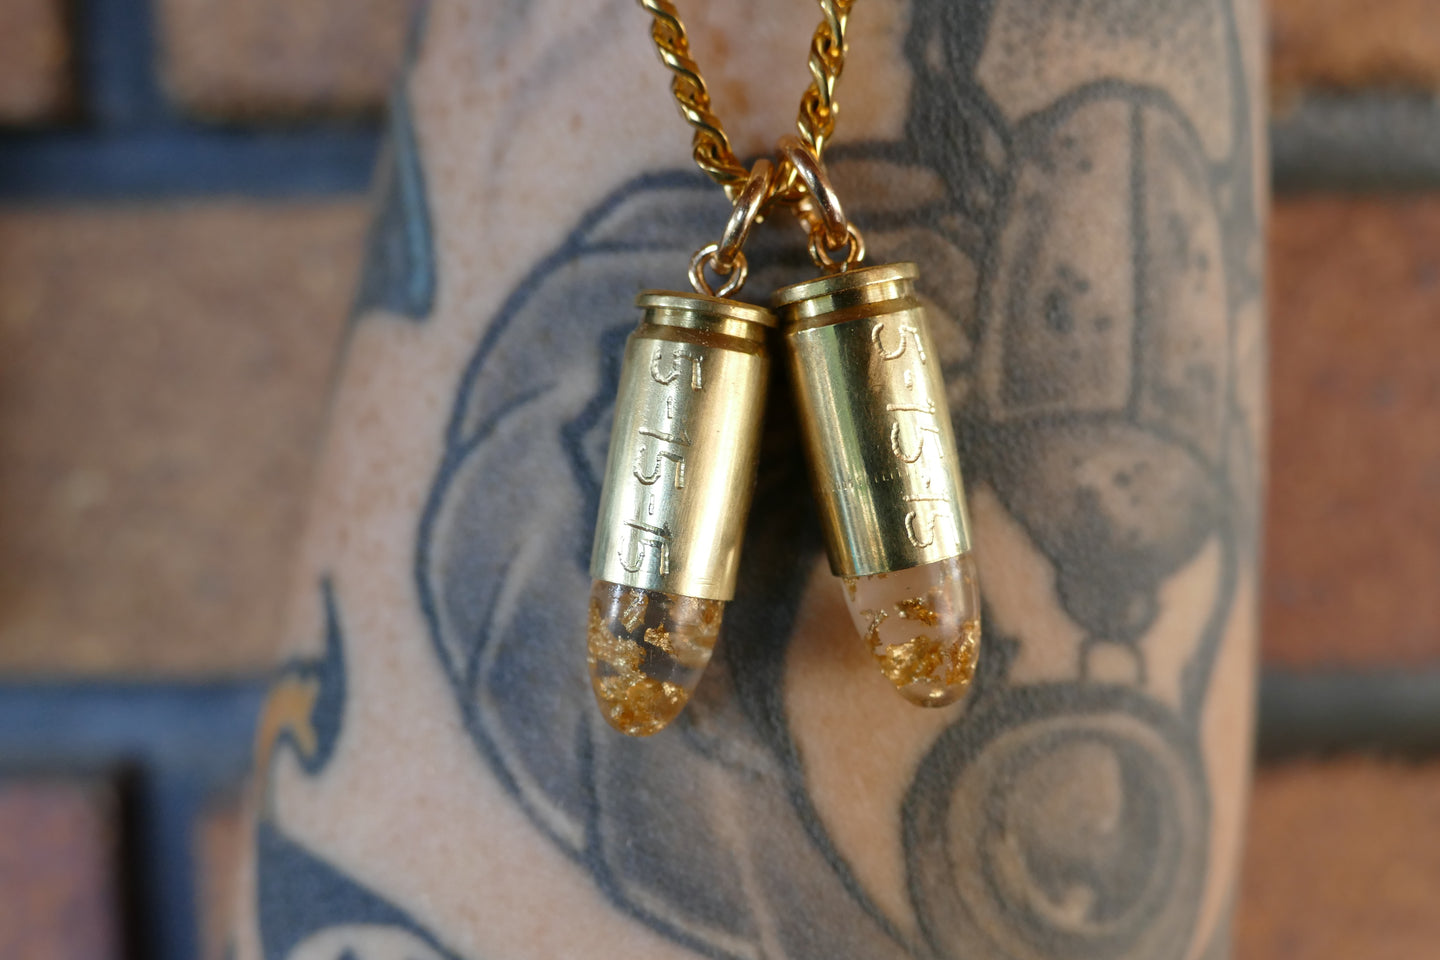 9mm Bullet Necklace